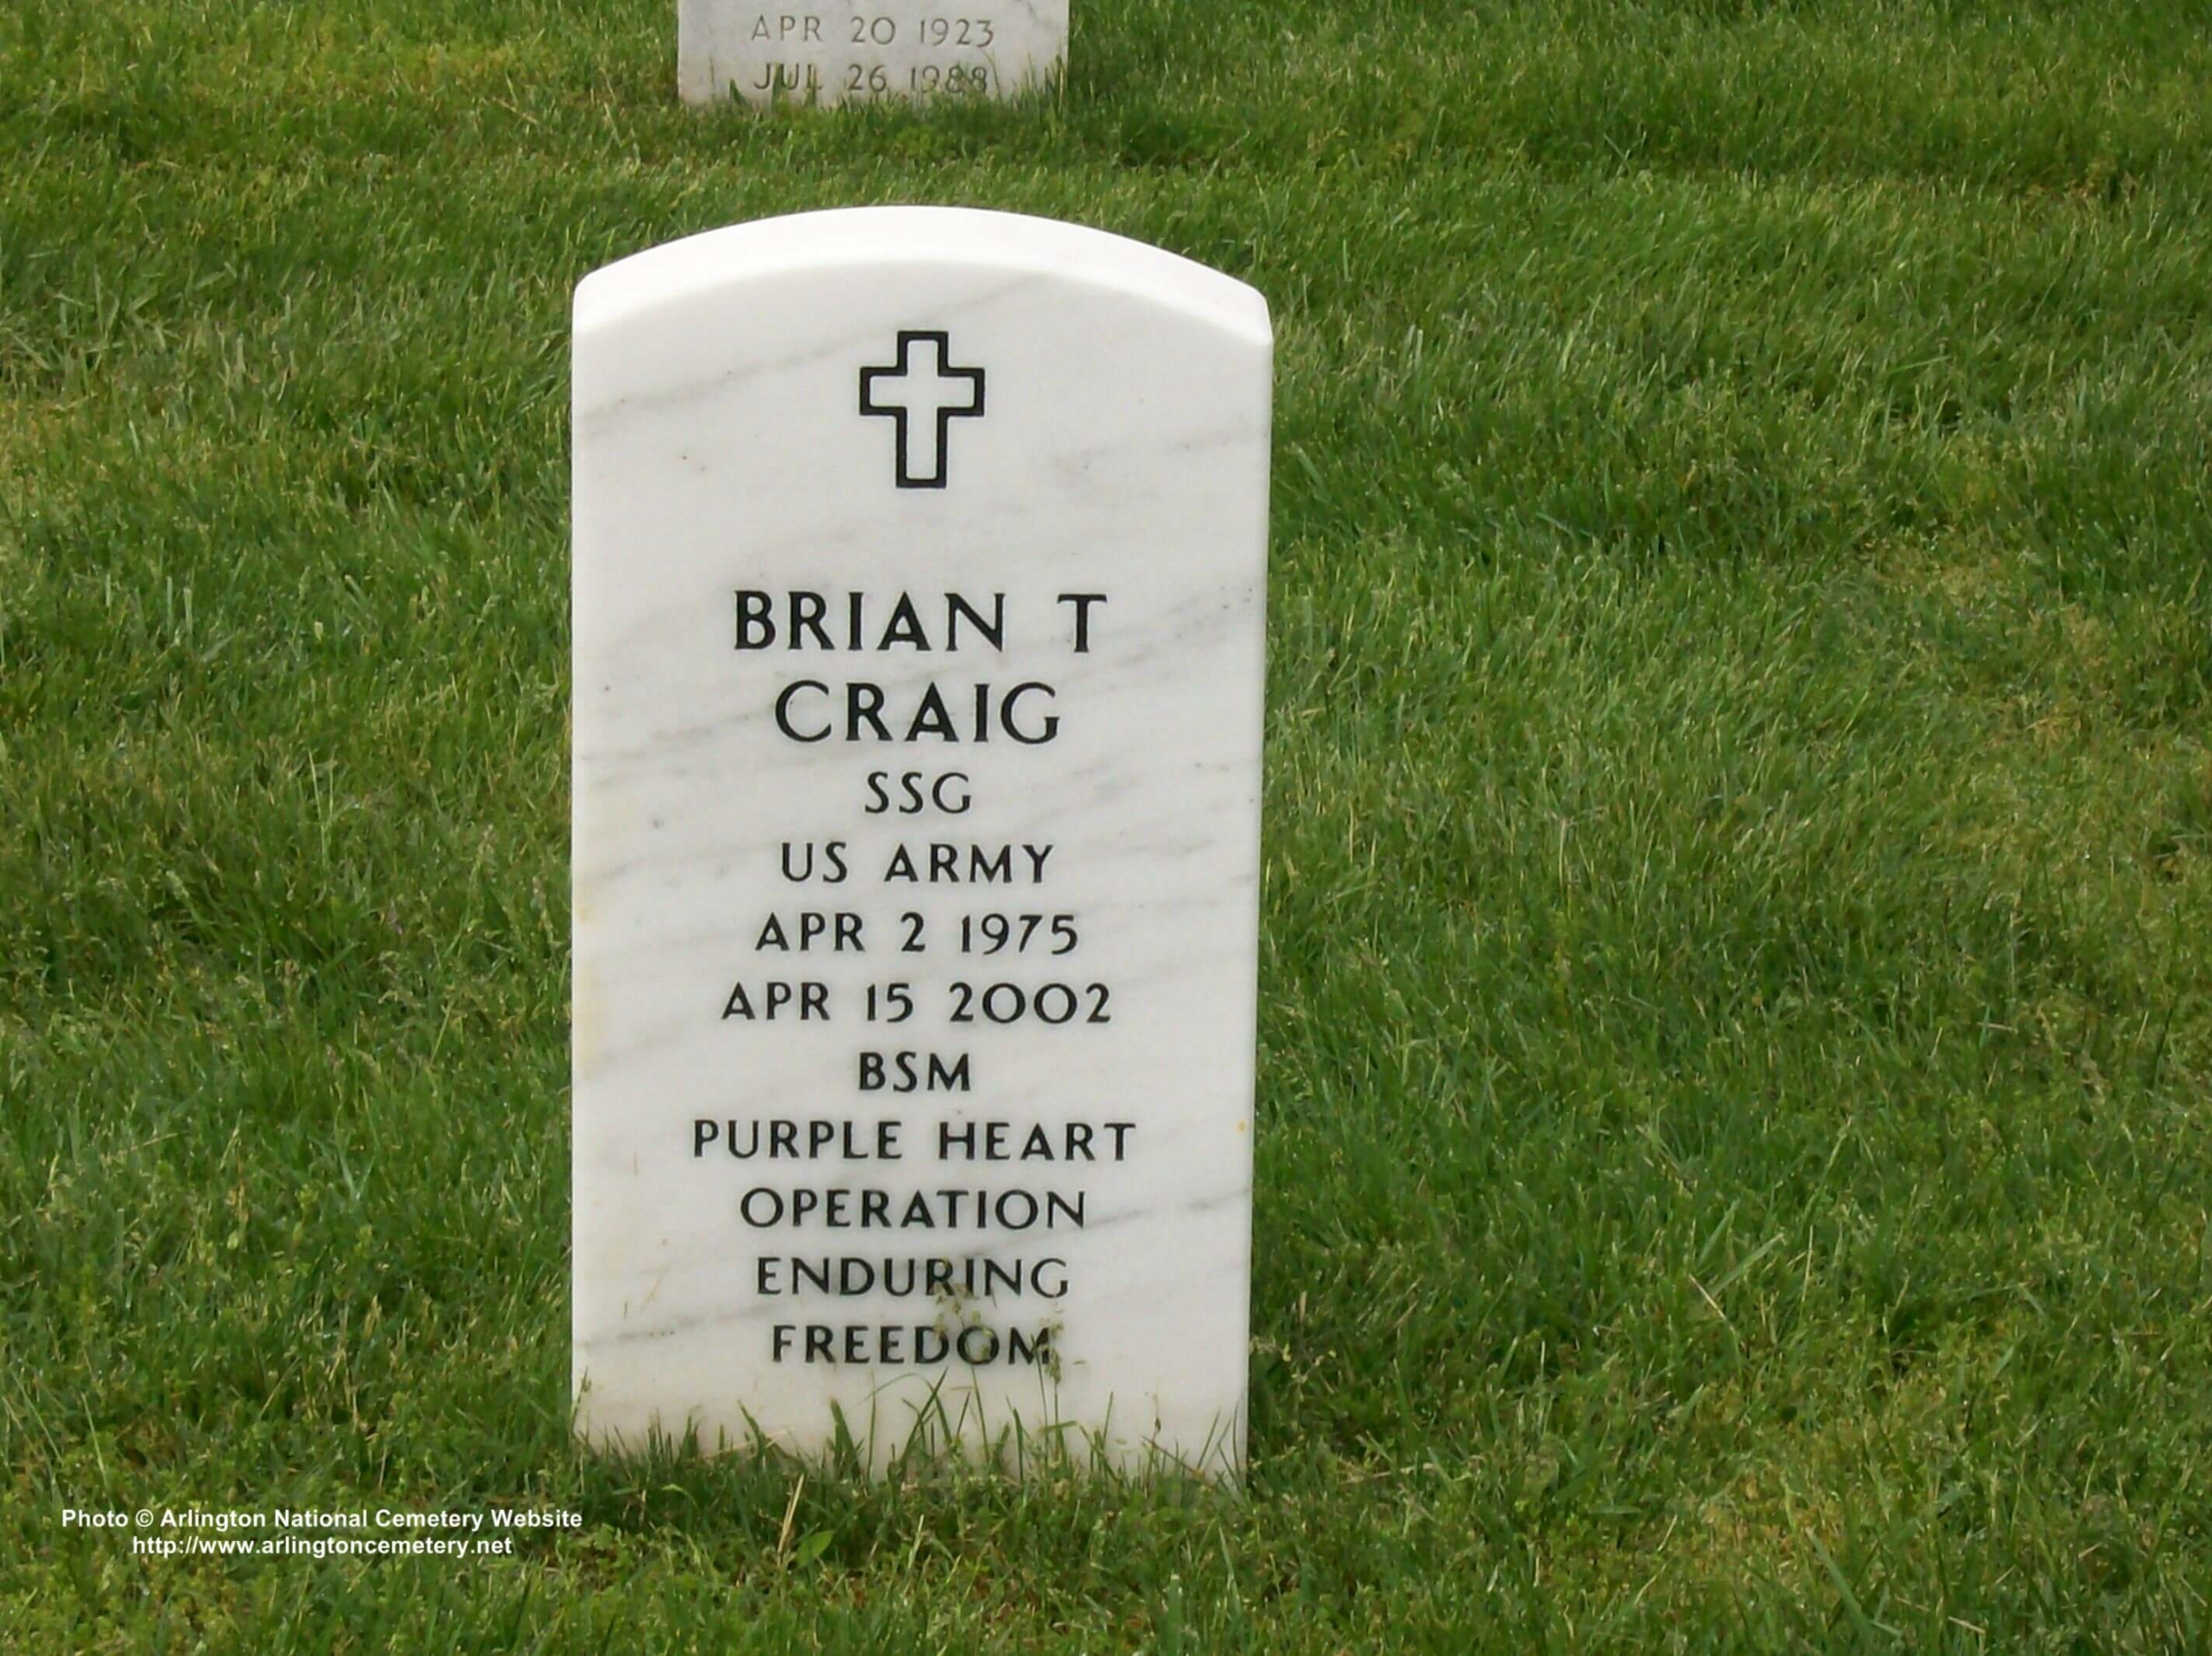 btcraig-gravesite-photo-may-2008-001